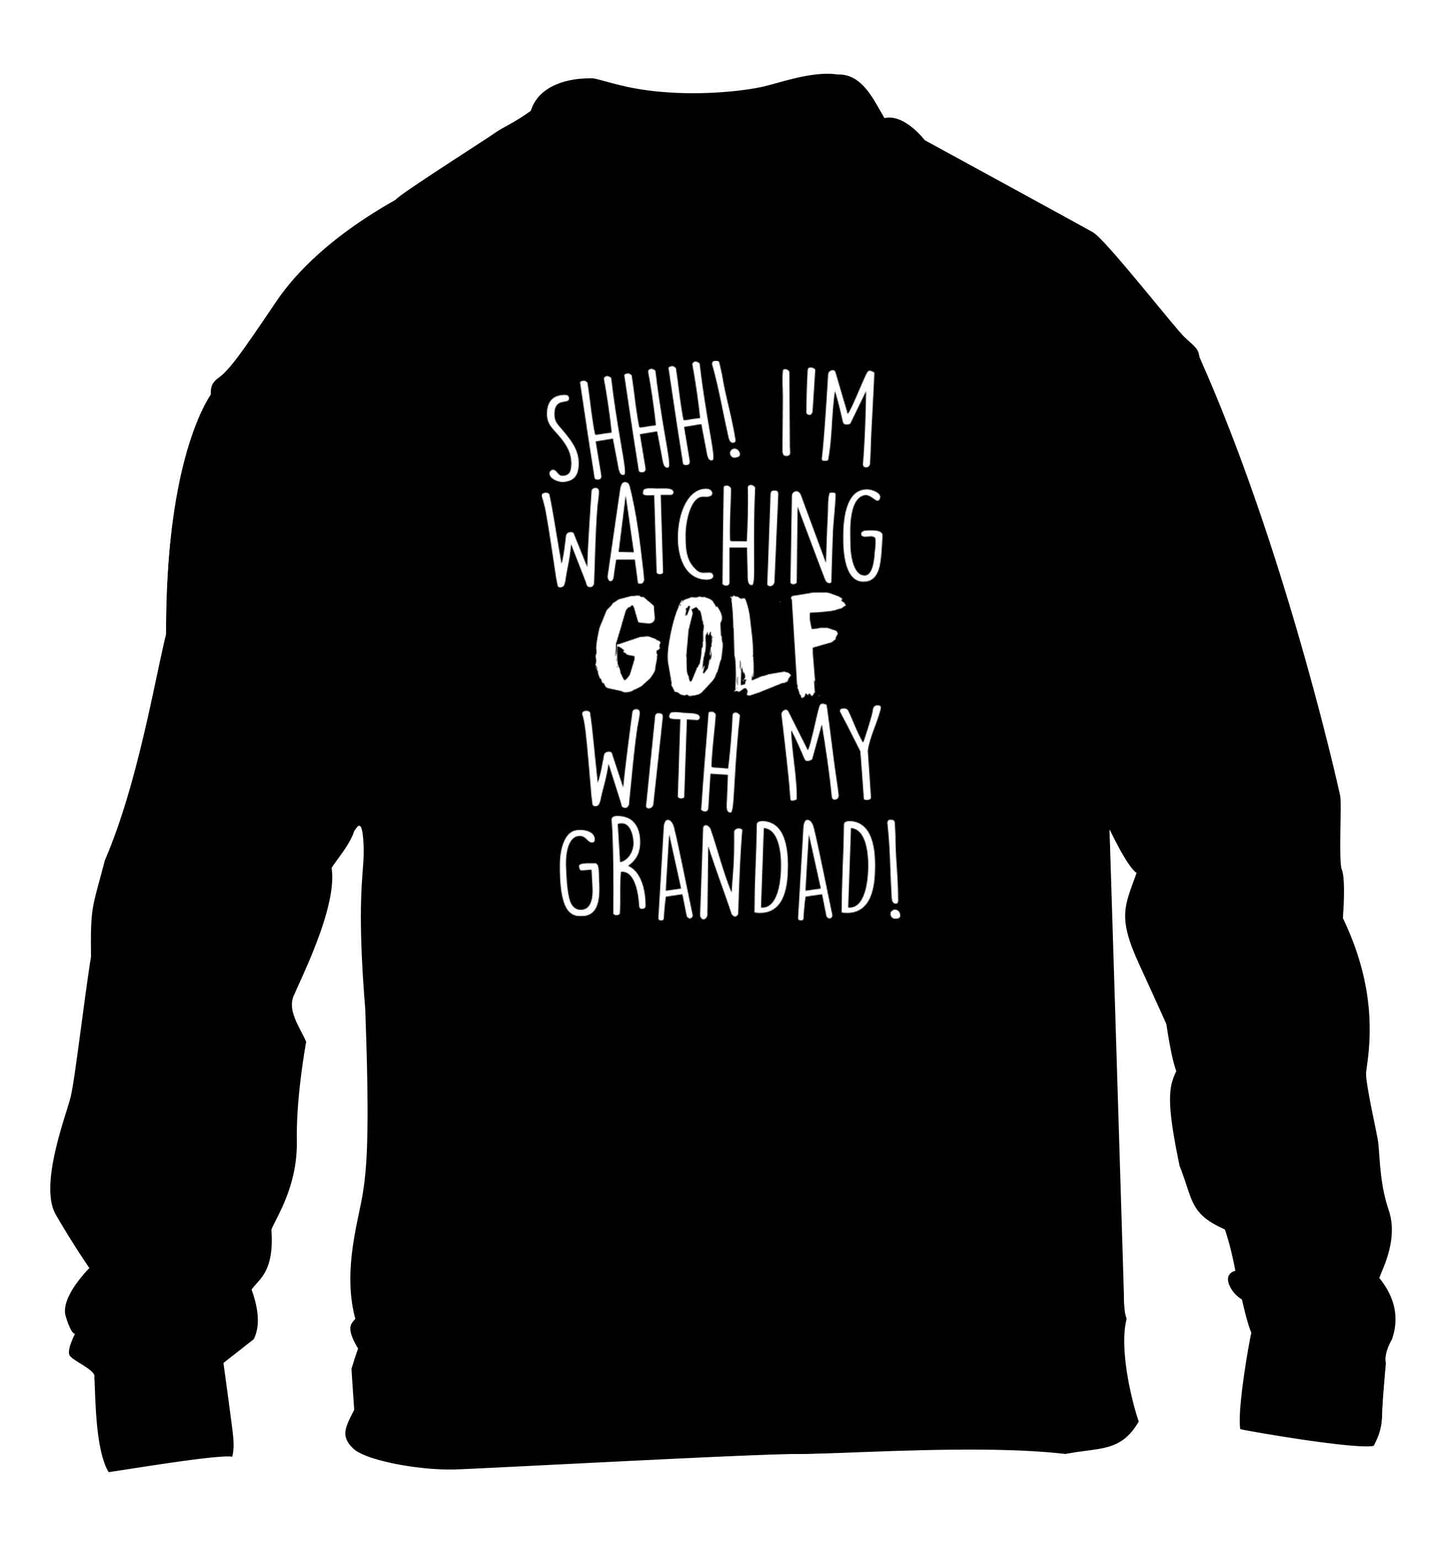 Shh I'm watching golf with my grandad children's black sweater 12-13 Years